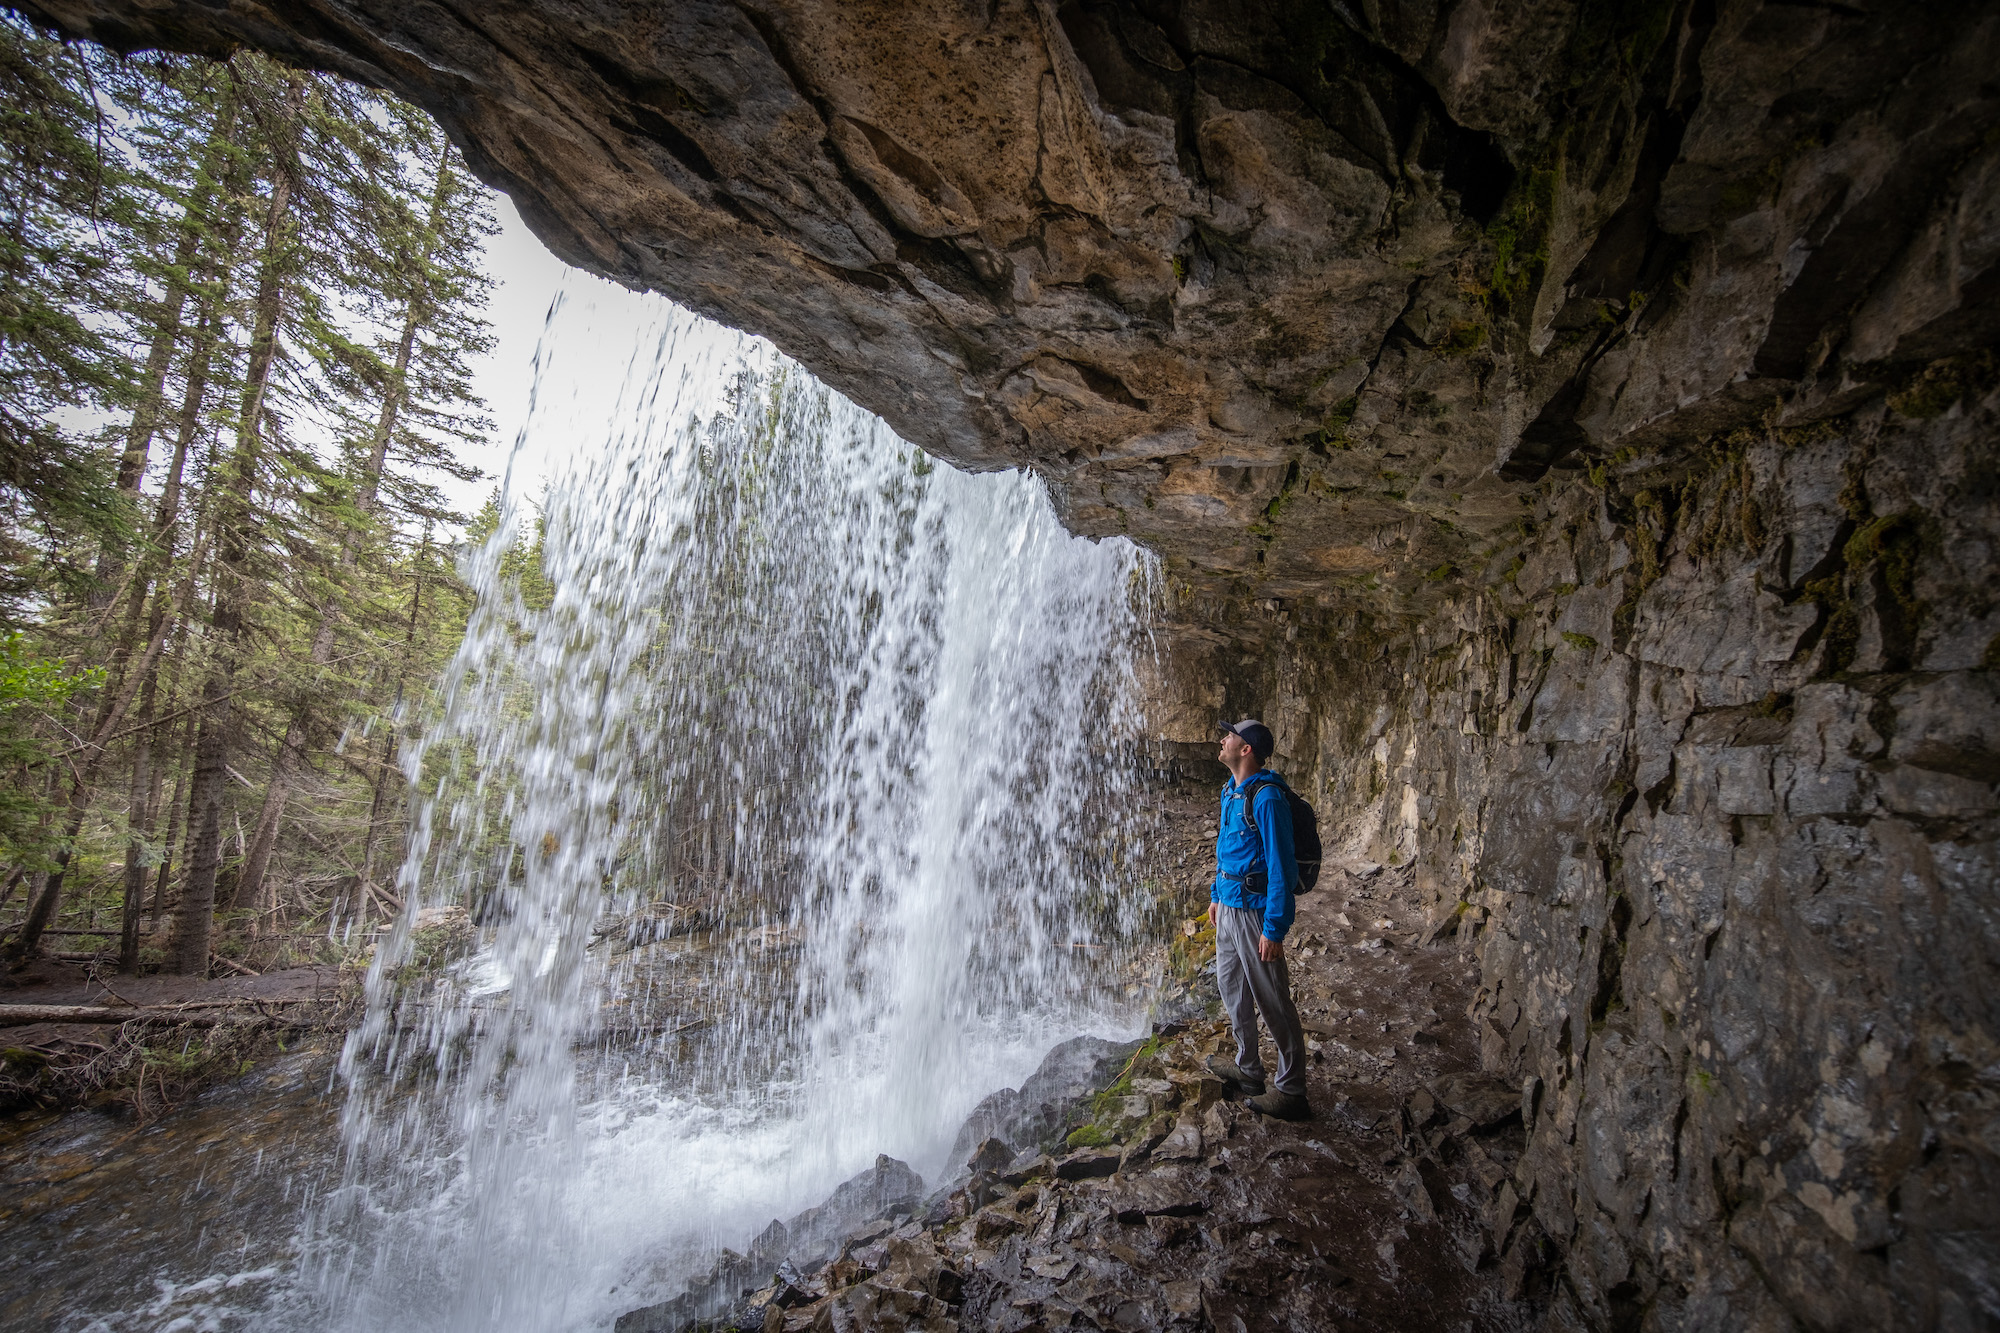 Cameron at Marmot Falls